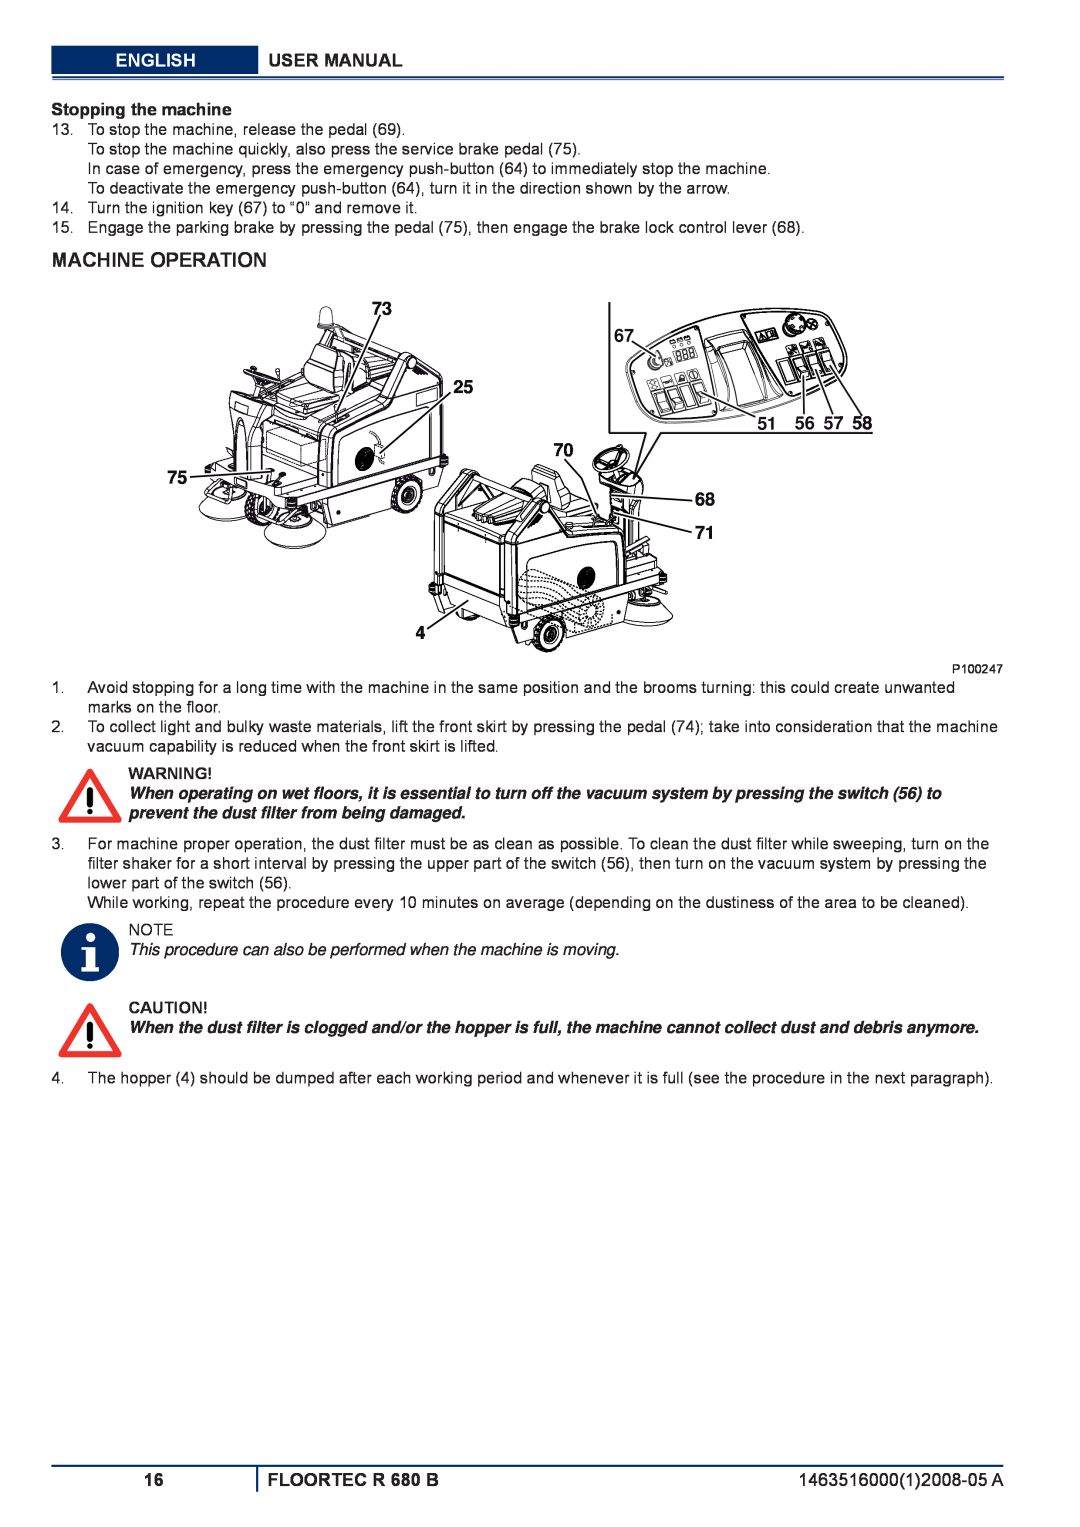 Nilfisk-ALTO manuel dutilisation Machine Operation, Stopping the machine, English, User Manual, 56 57, FLOORTEC R 680 B 